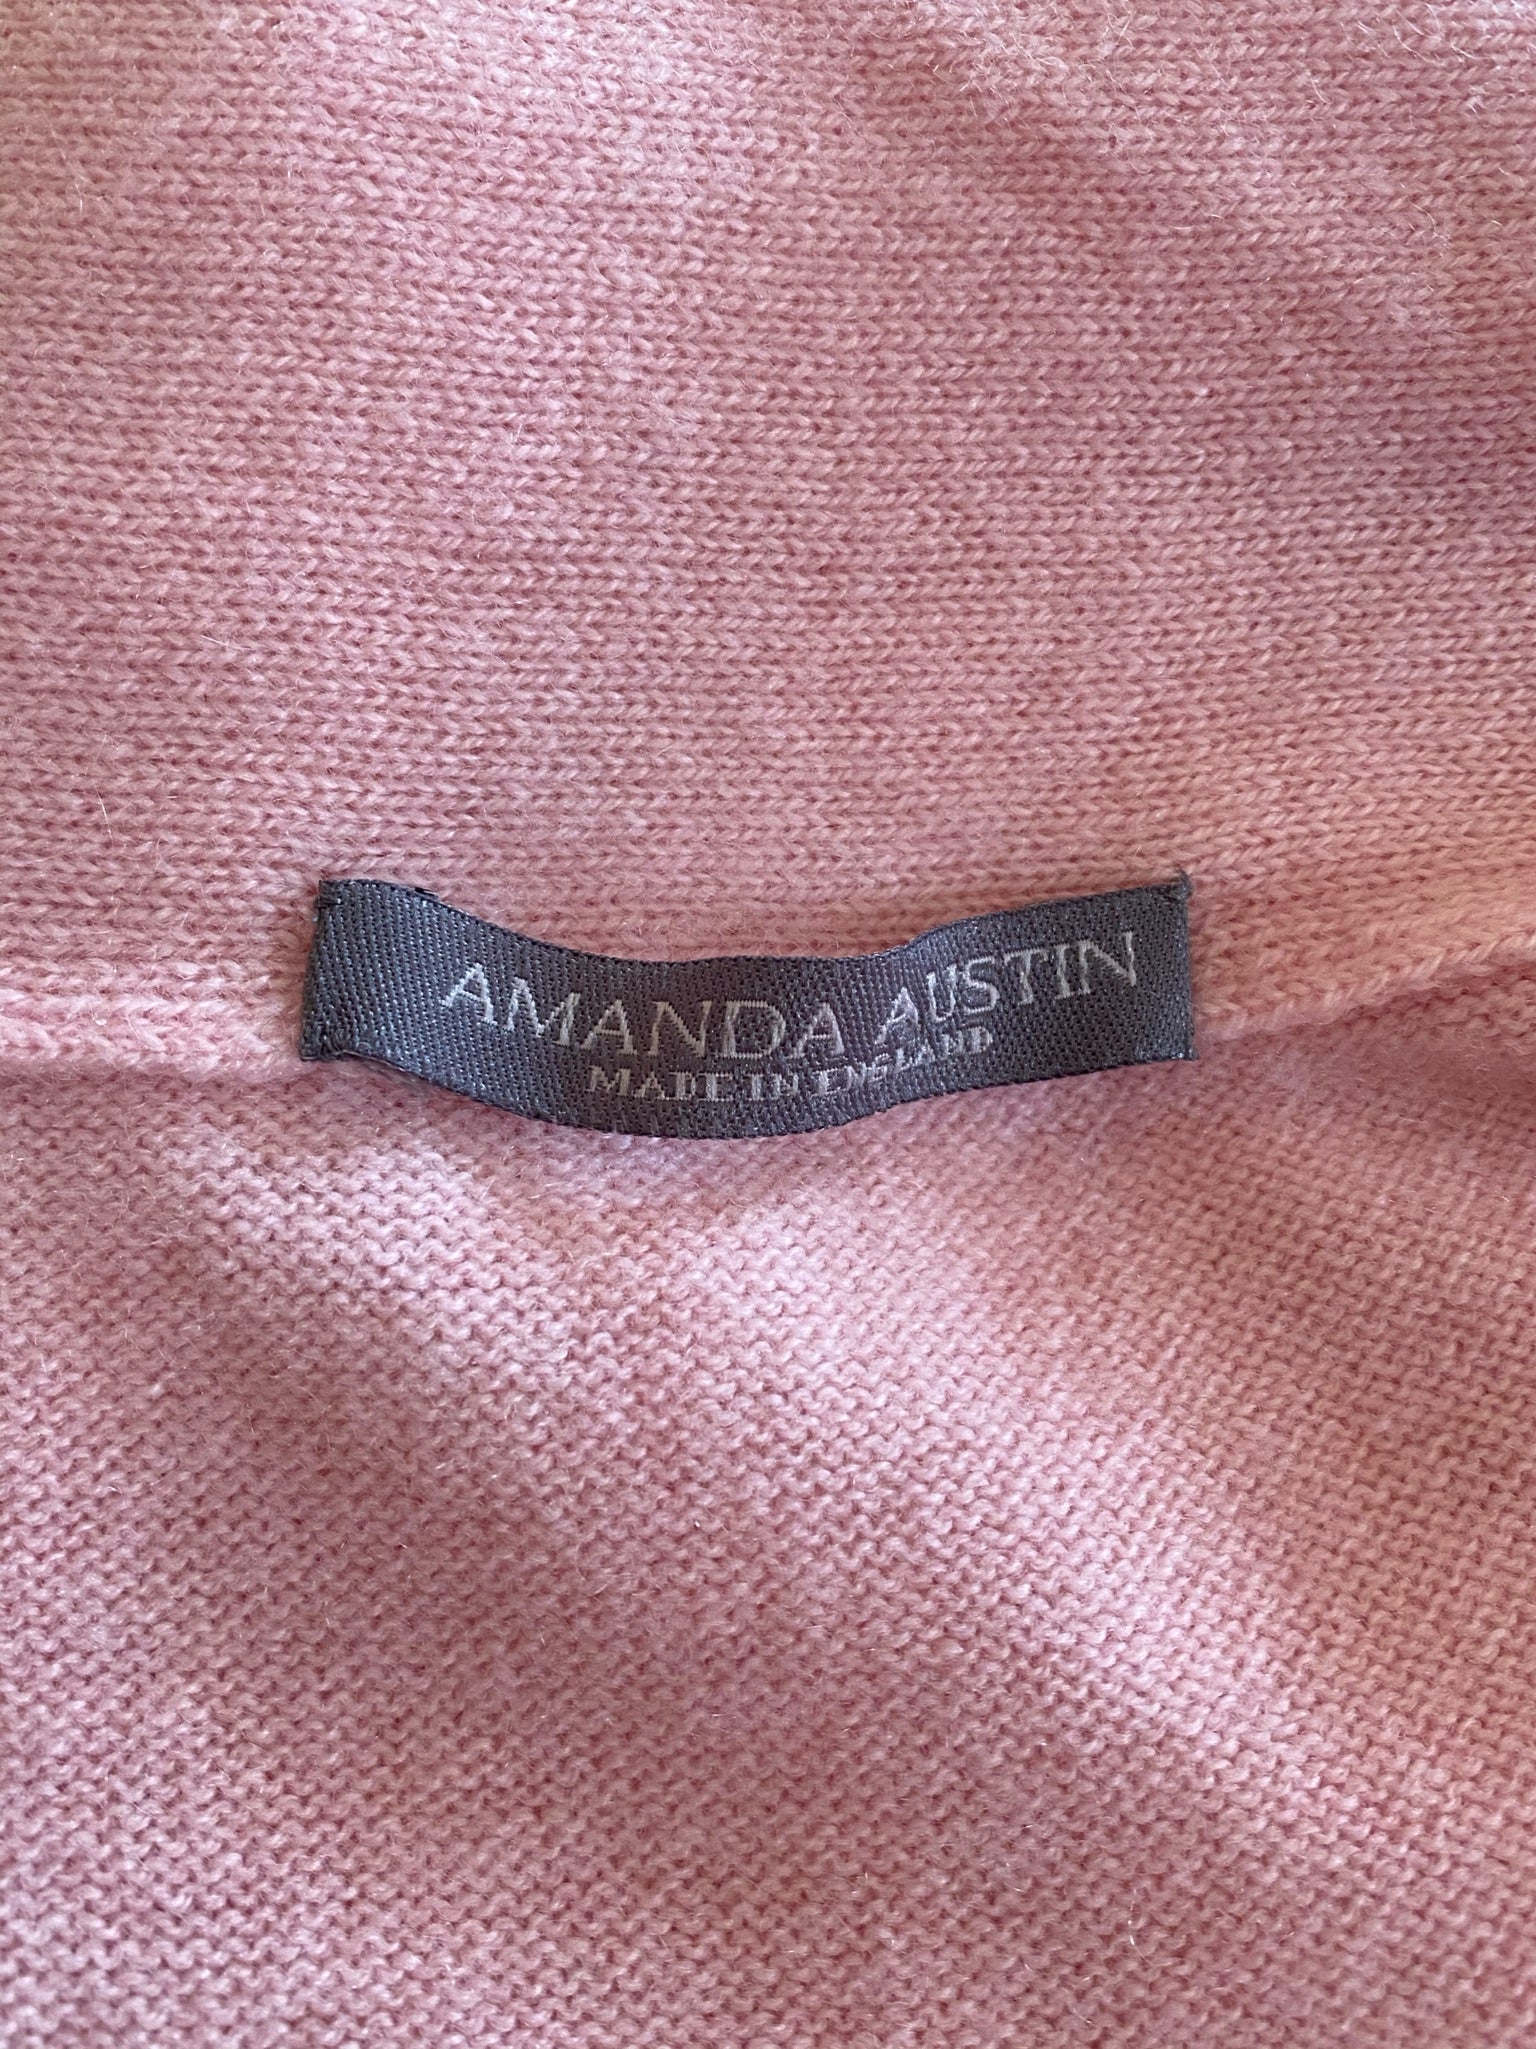 Amanda Austin Cashmere Dressing Gown